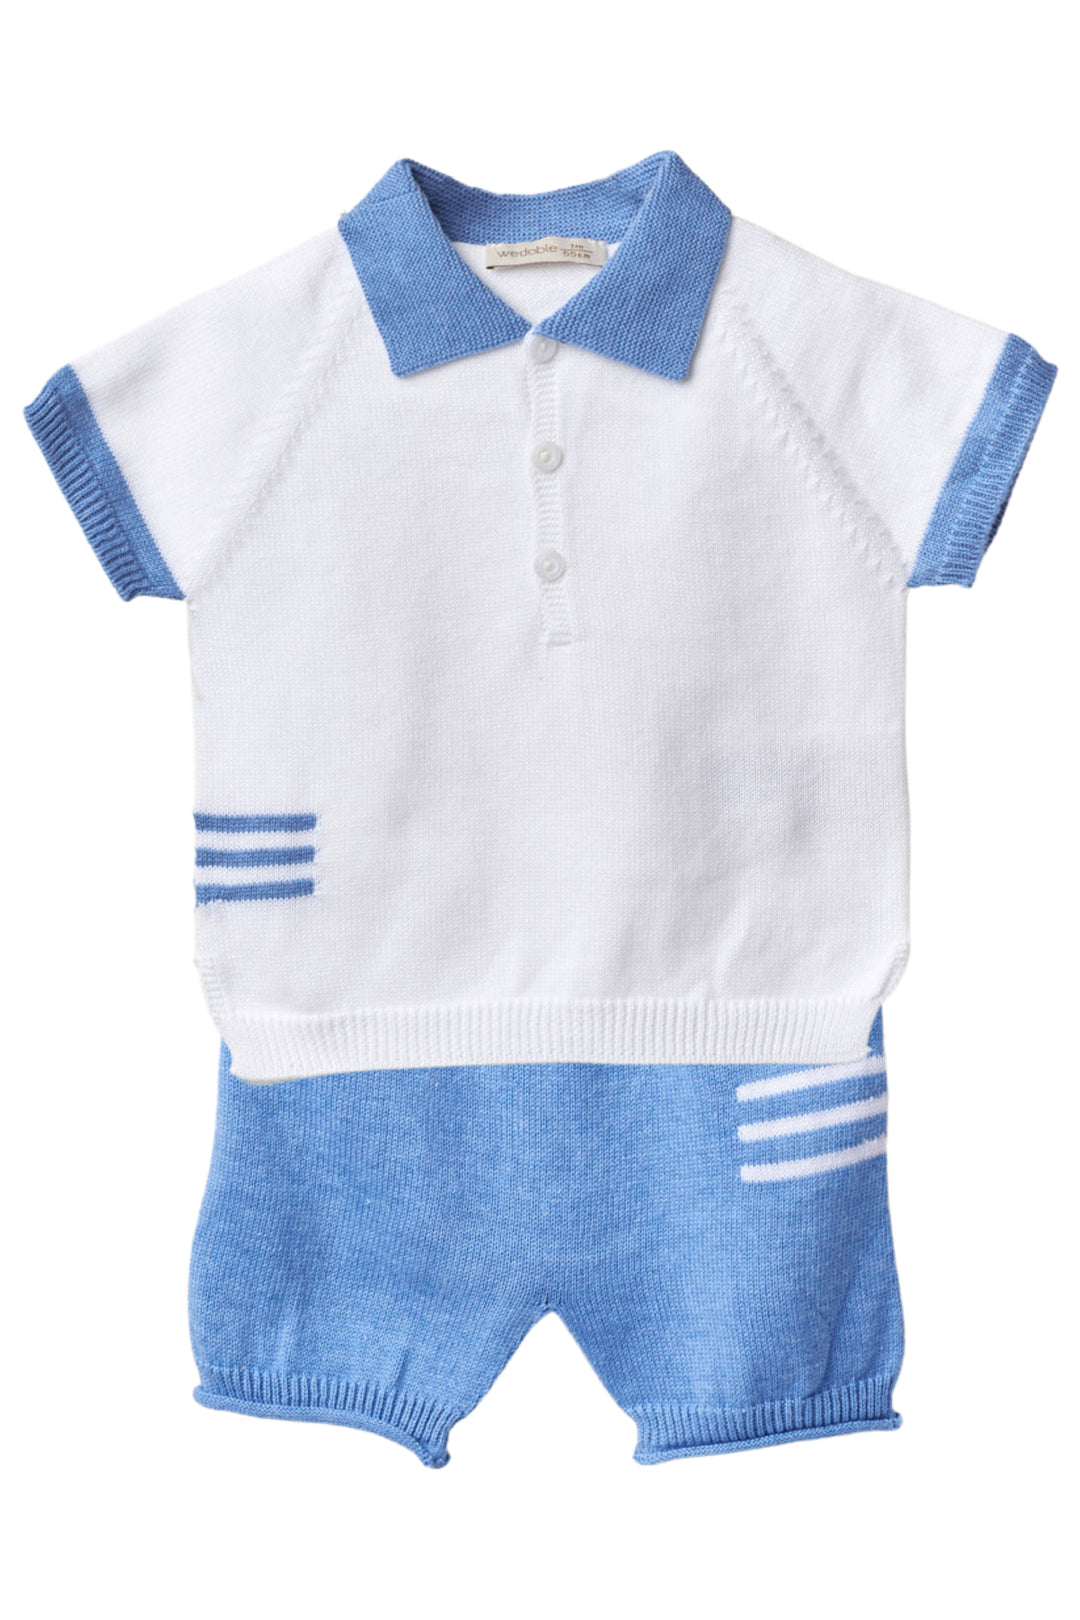 Wedoble "Rowan" Royal Blue Striped Knitted Polo Shirt & Shorts | Millie and John